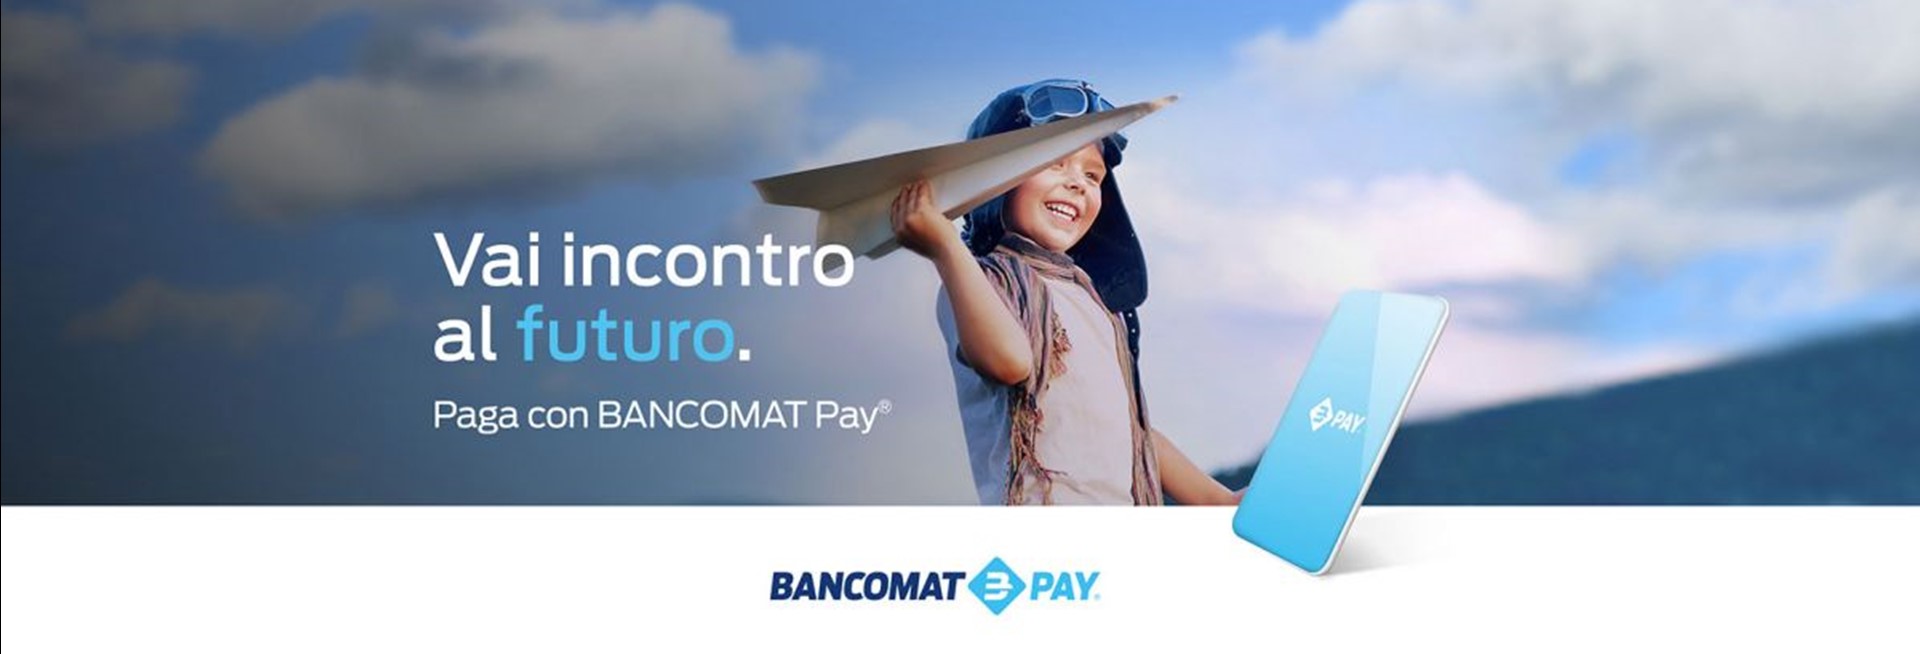 Bancomat pay v2